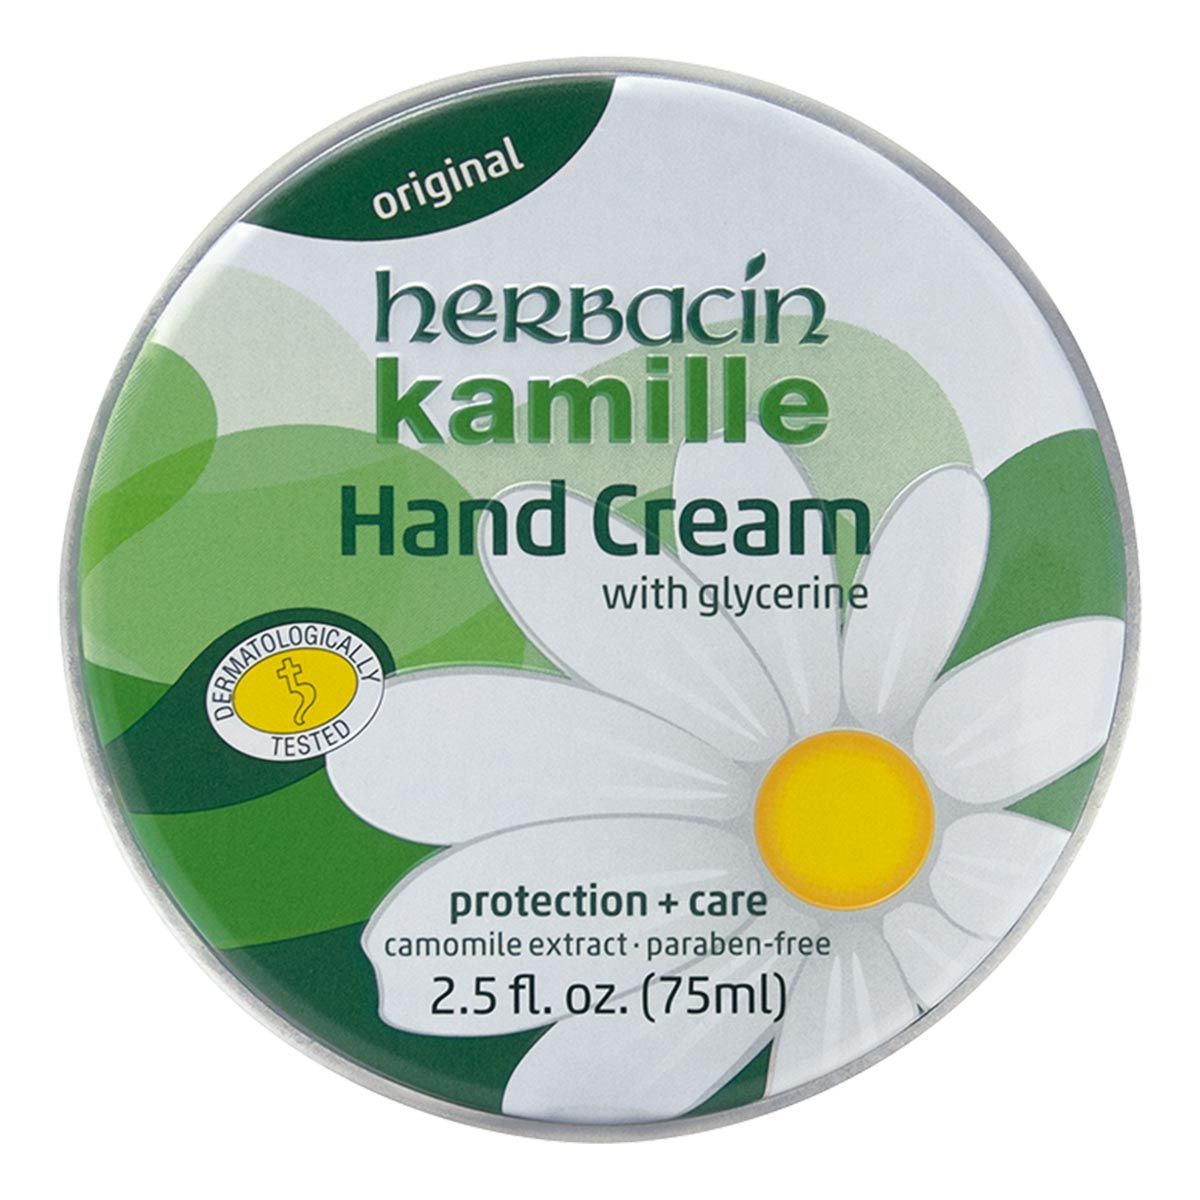 Primary image of Herbacin Chamomile and Glycerin Hand Cream Tin